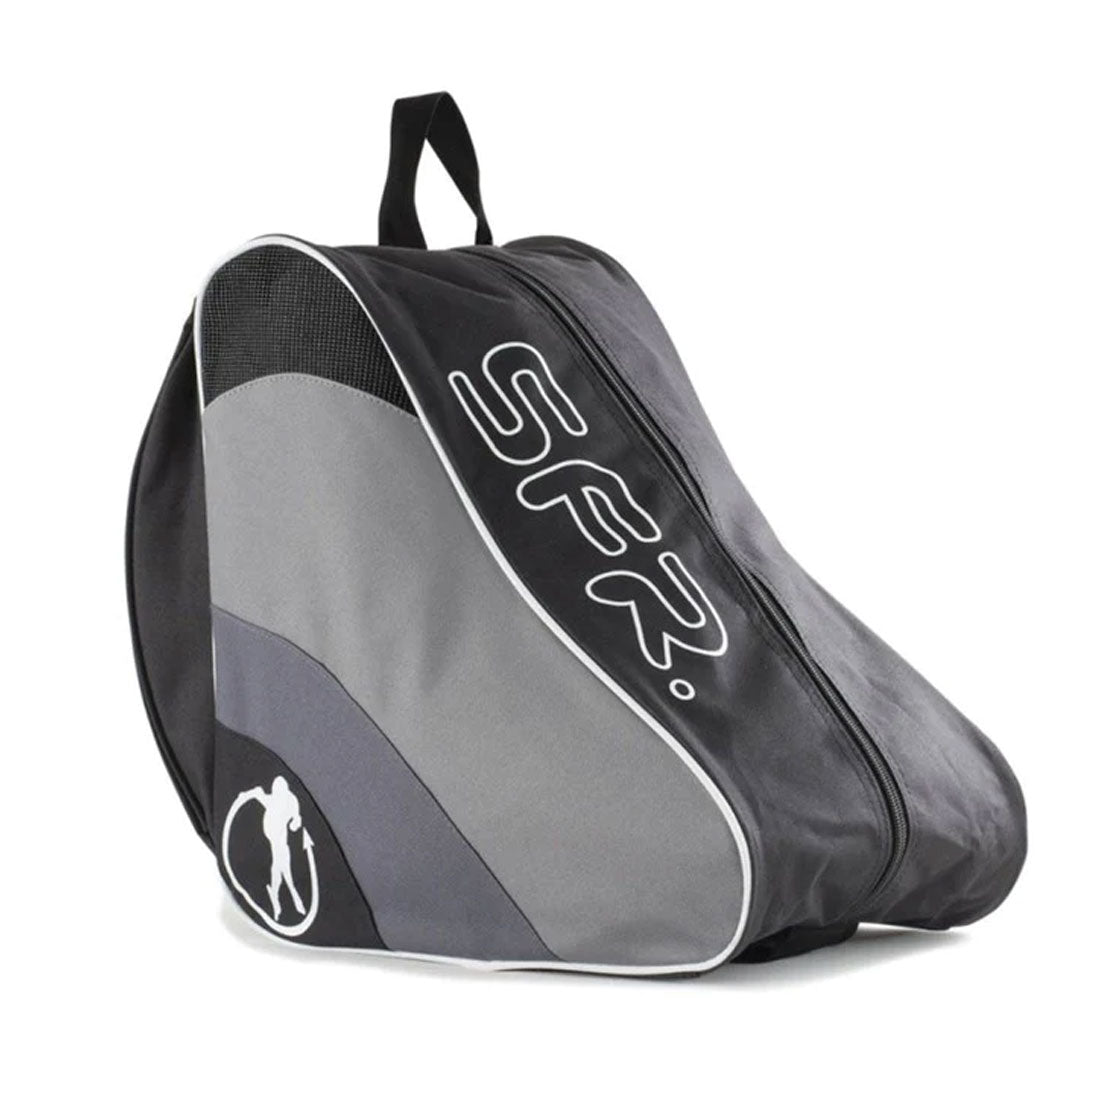 SFR Skate Bag V2 - Black Bags and Backpacks